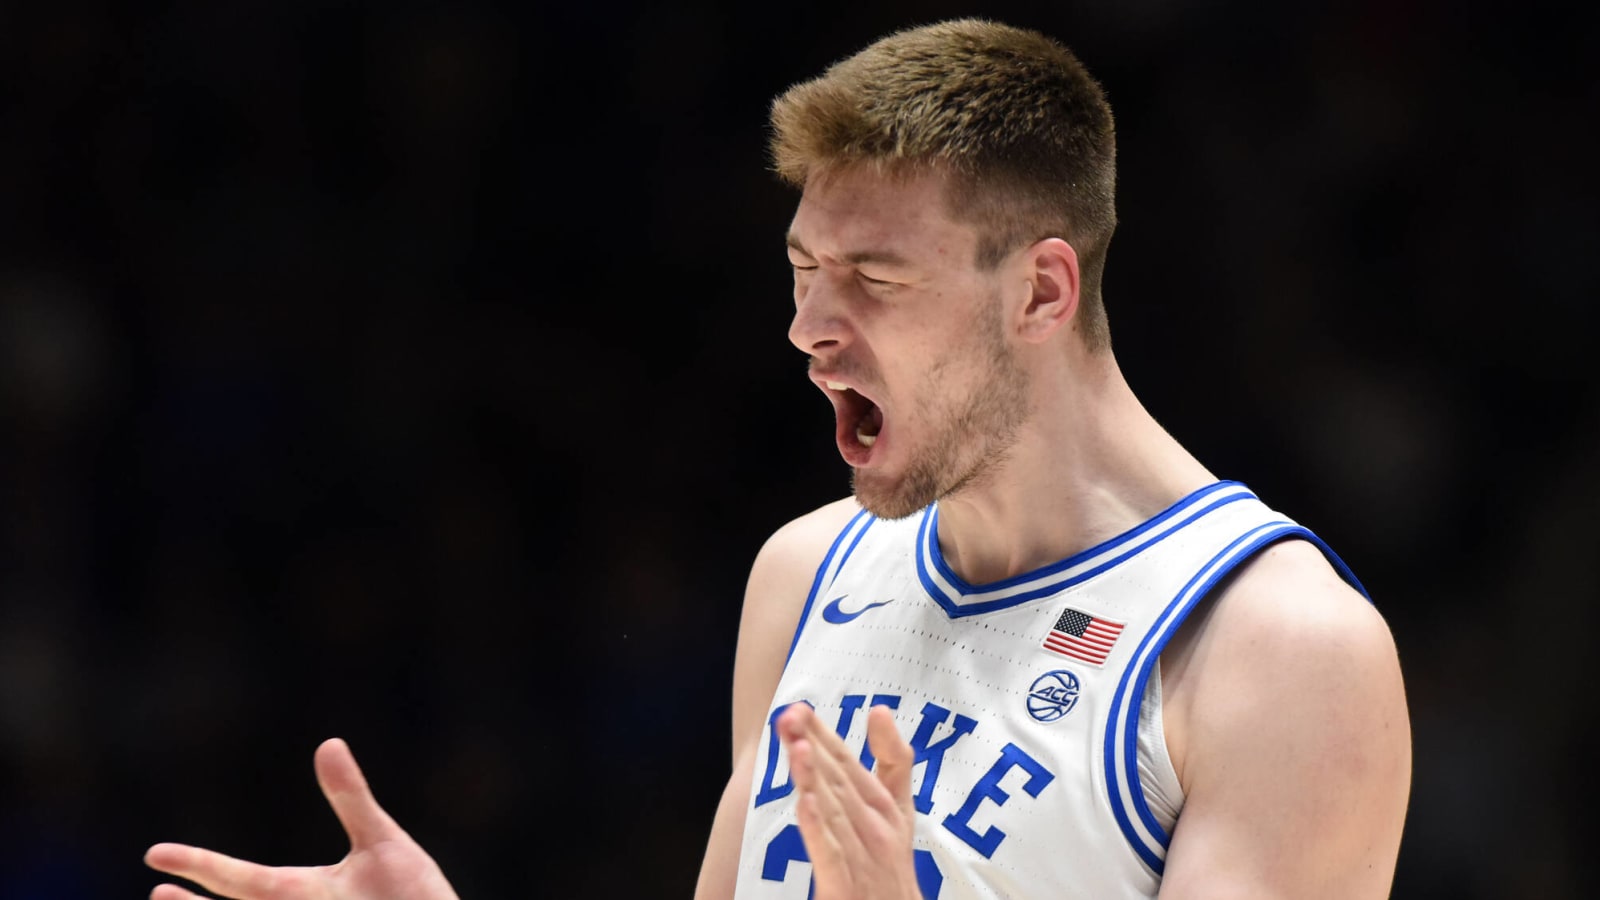 Watch: Duke star blatantly trips North Carolina player